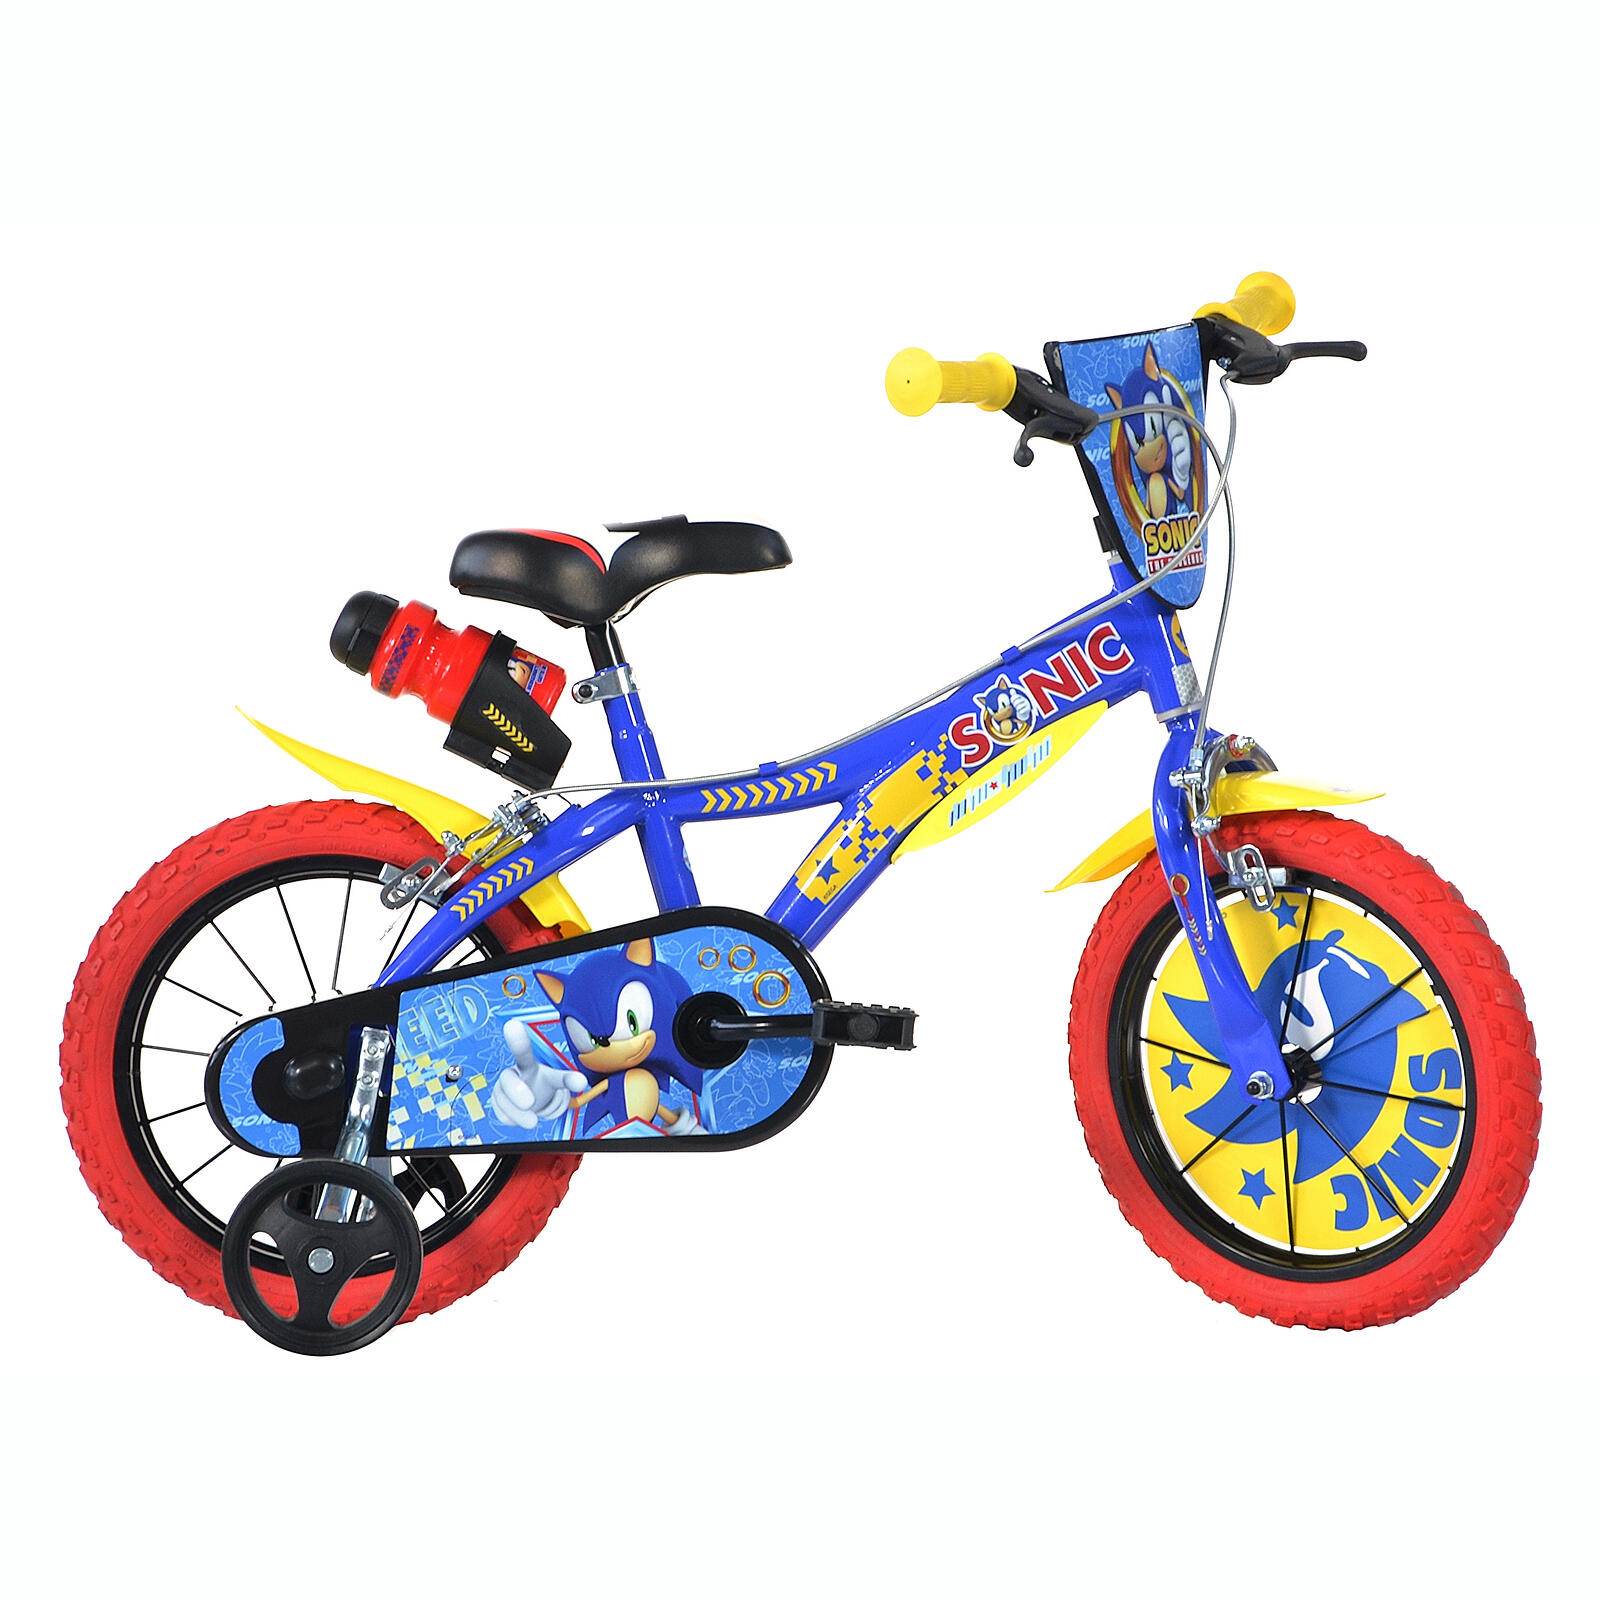 Sonic The Hedgehog 16" Bicycle 1/6